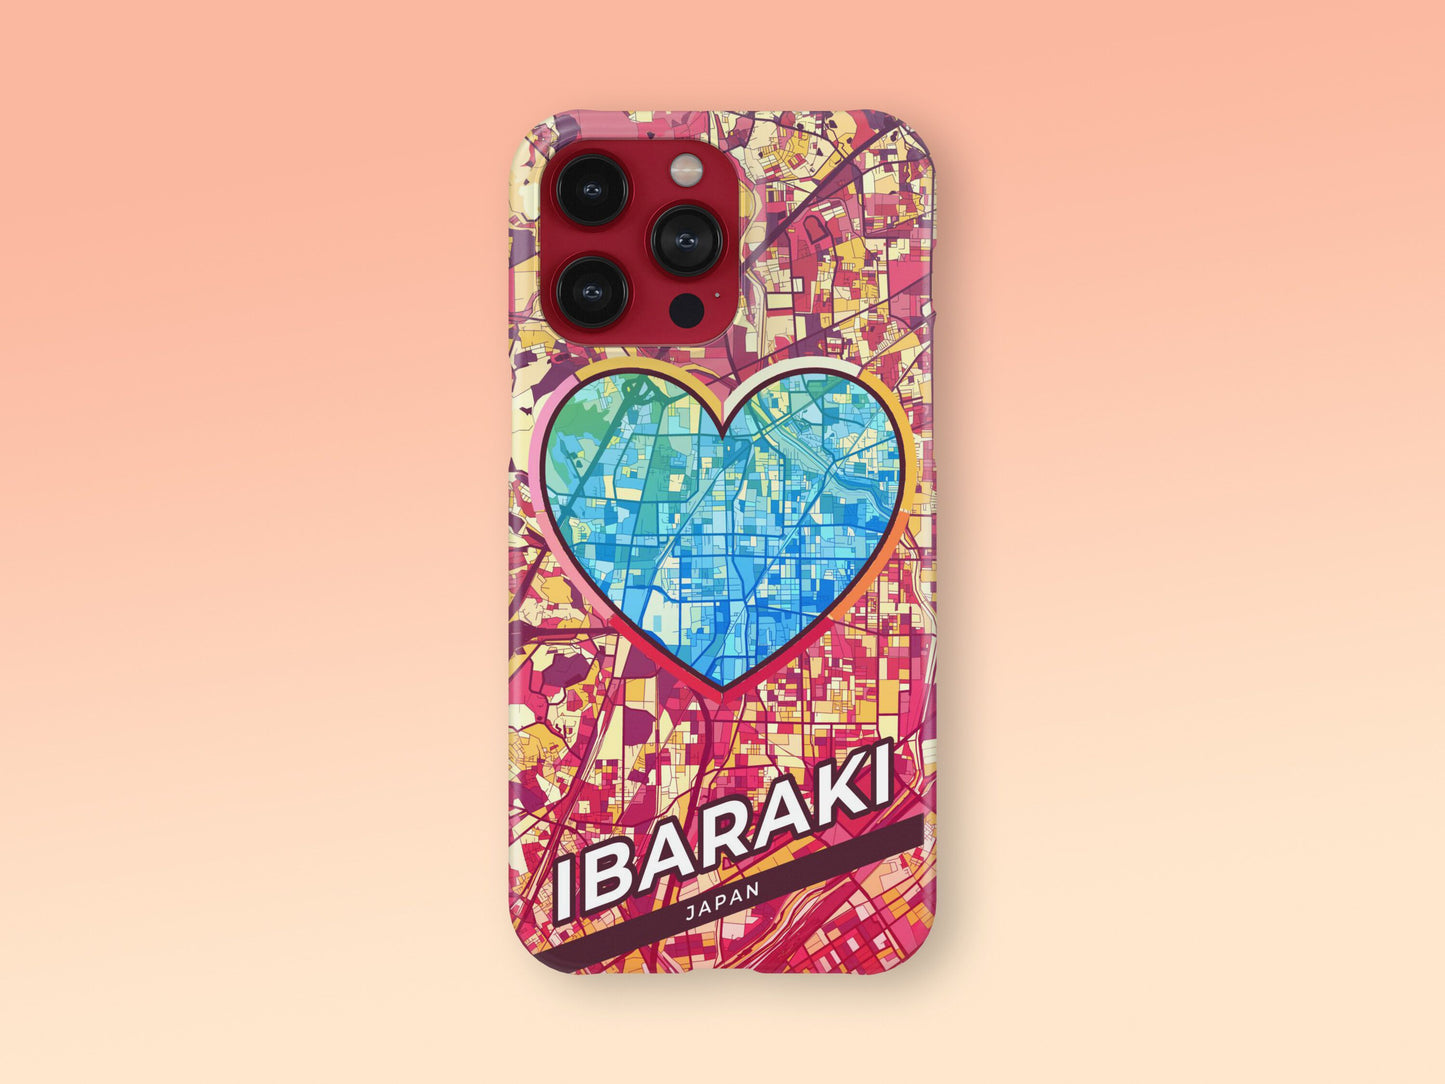 Ibaraki Japan slim phone case with colorful icon. Birthday, wedding or housewarming gift. Couple match cases. 2